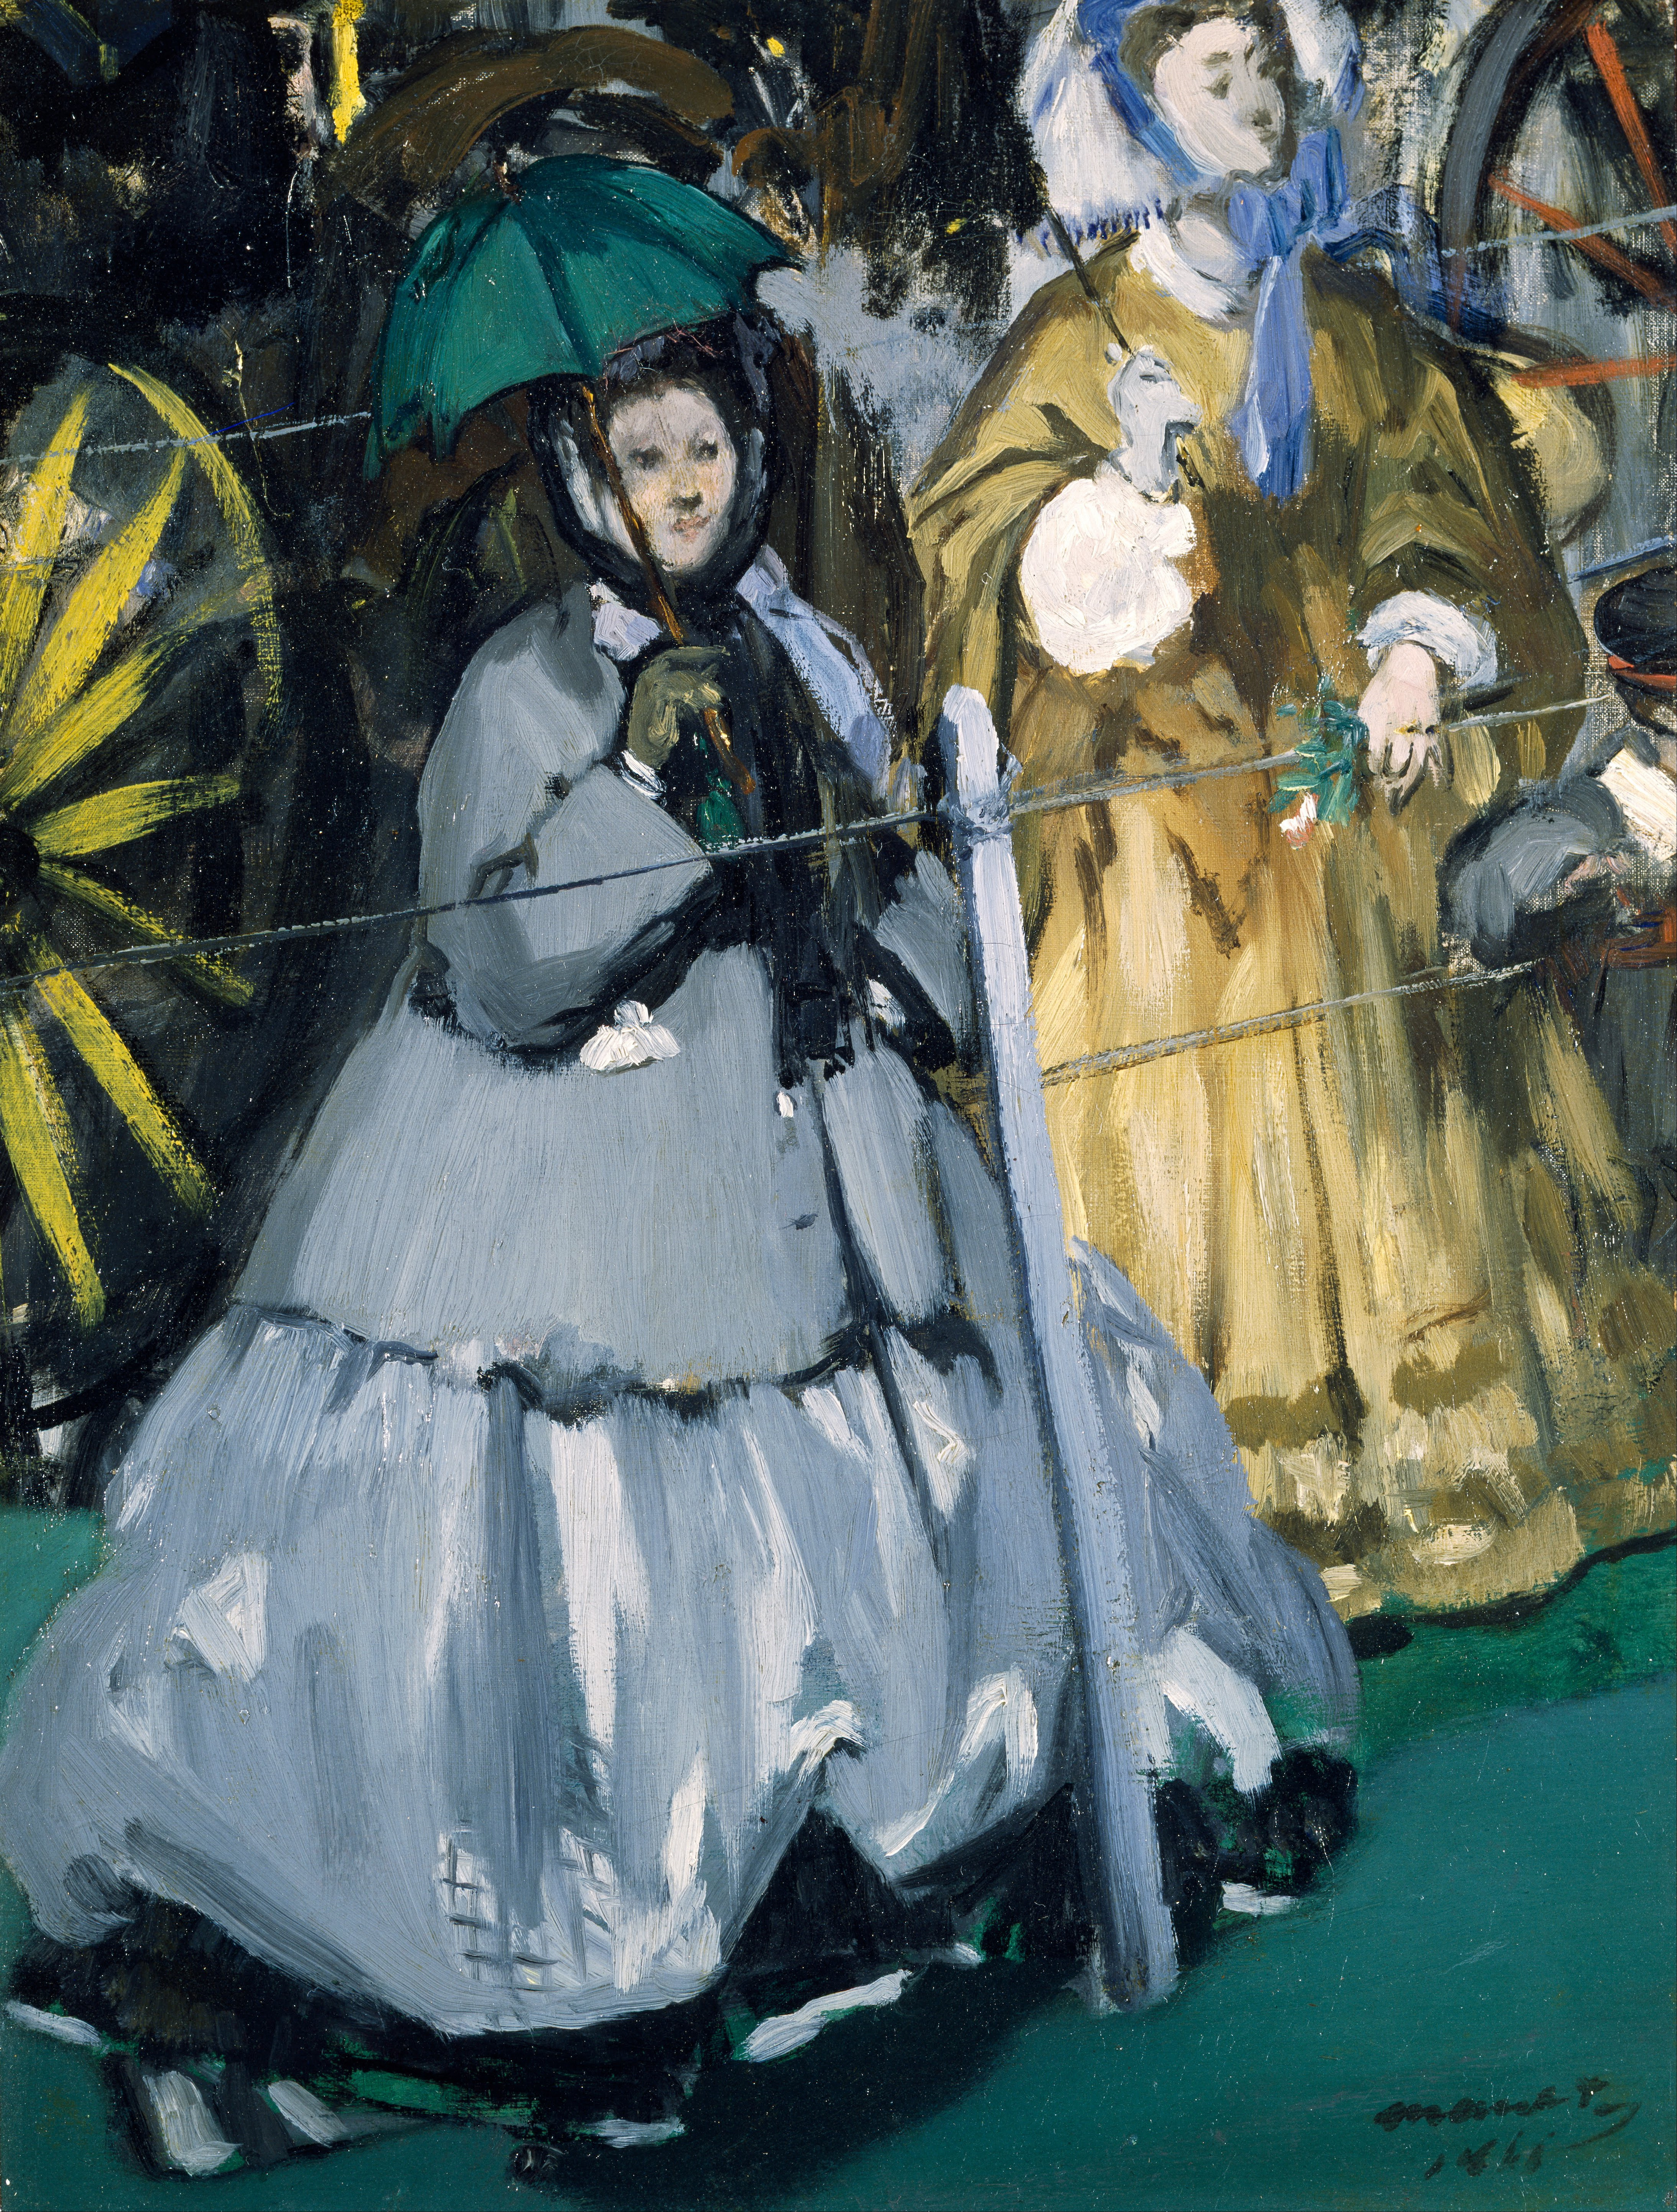 Mulheres nas corridas by Édouard Manet - 1866 